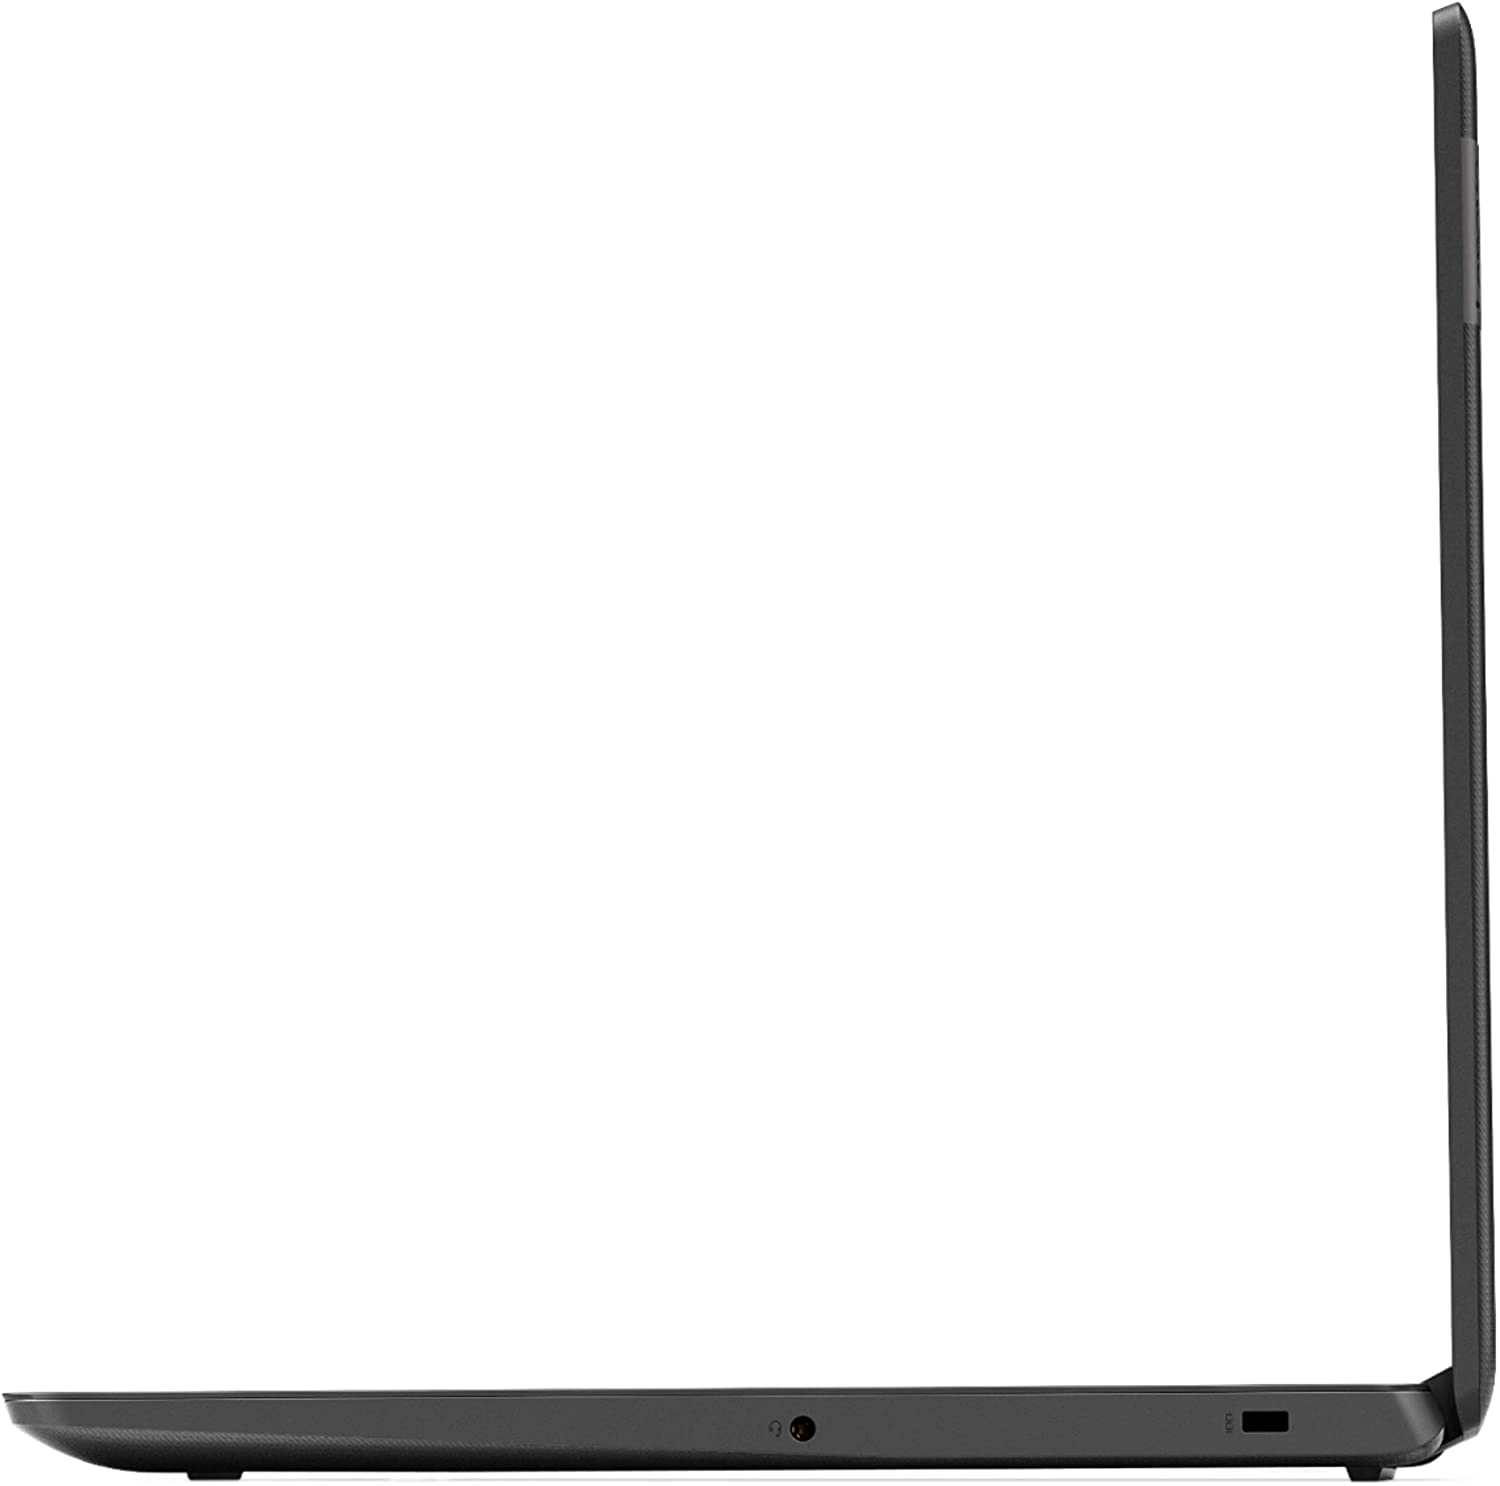 Lenovo Premium Chromebook 3 laptop image